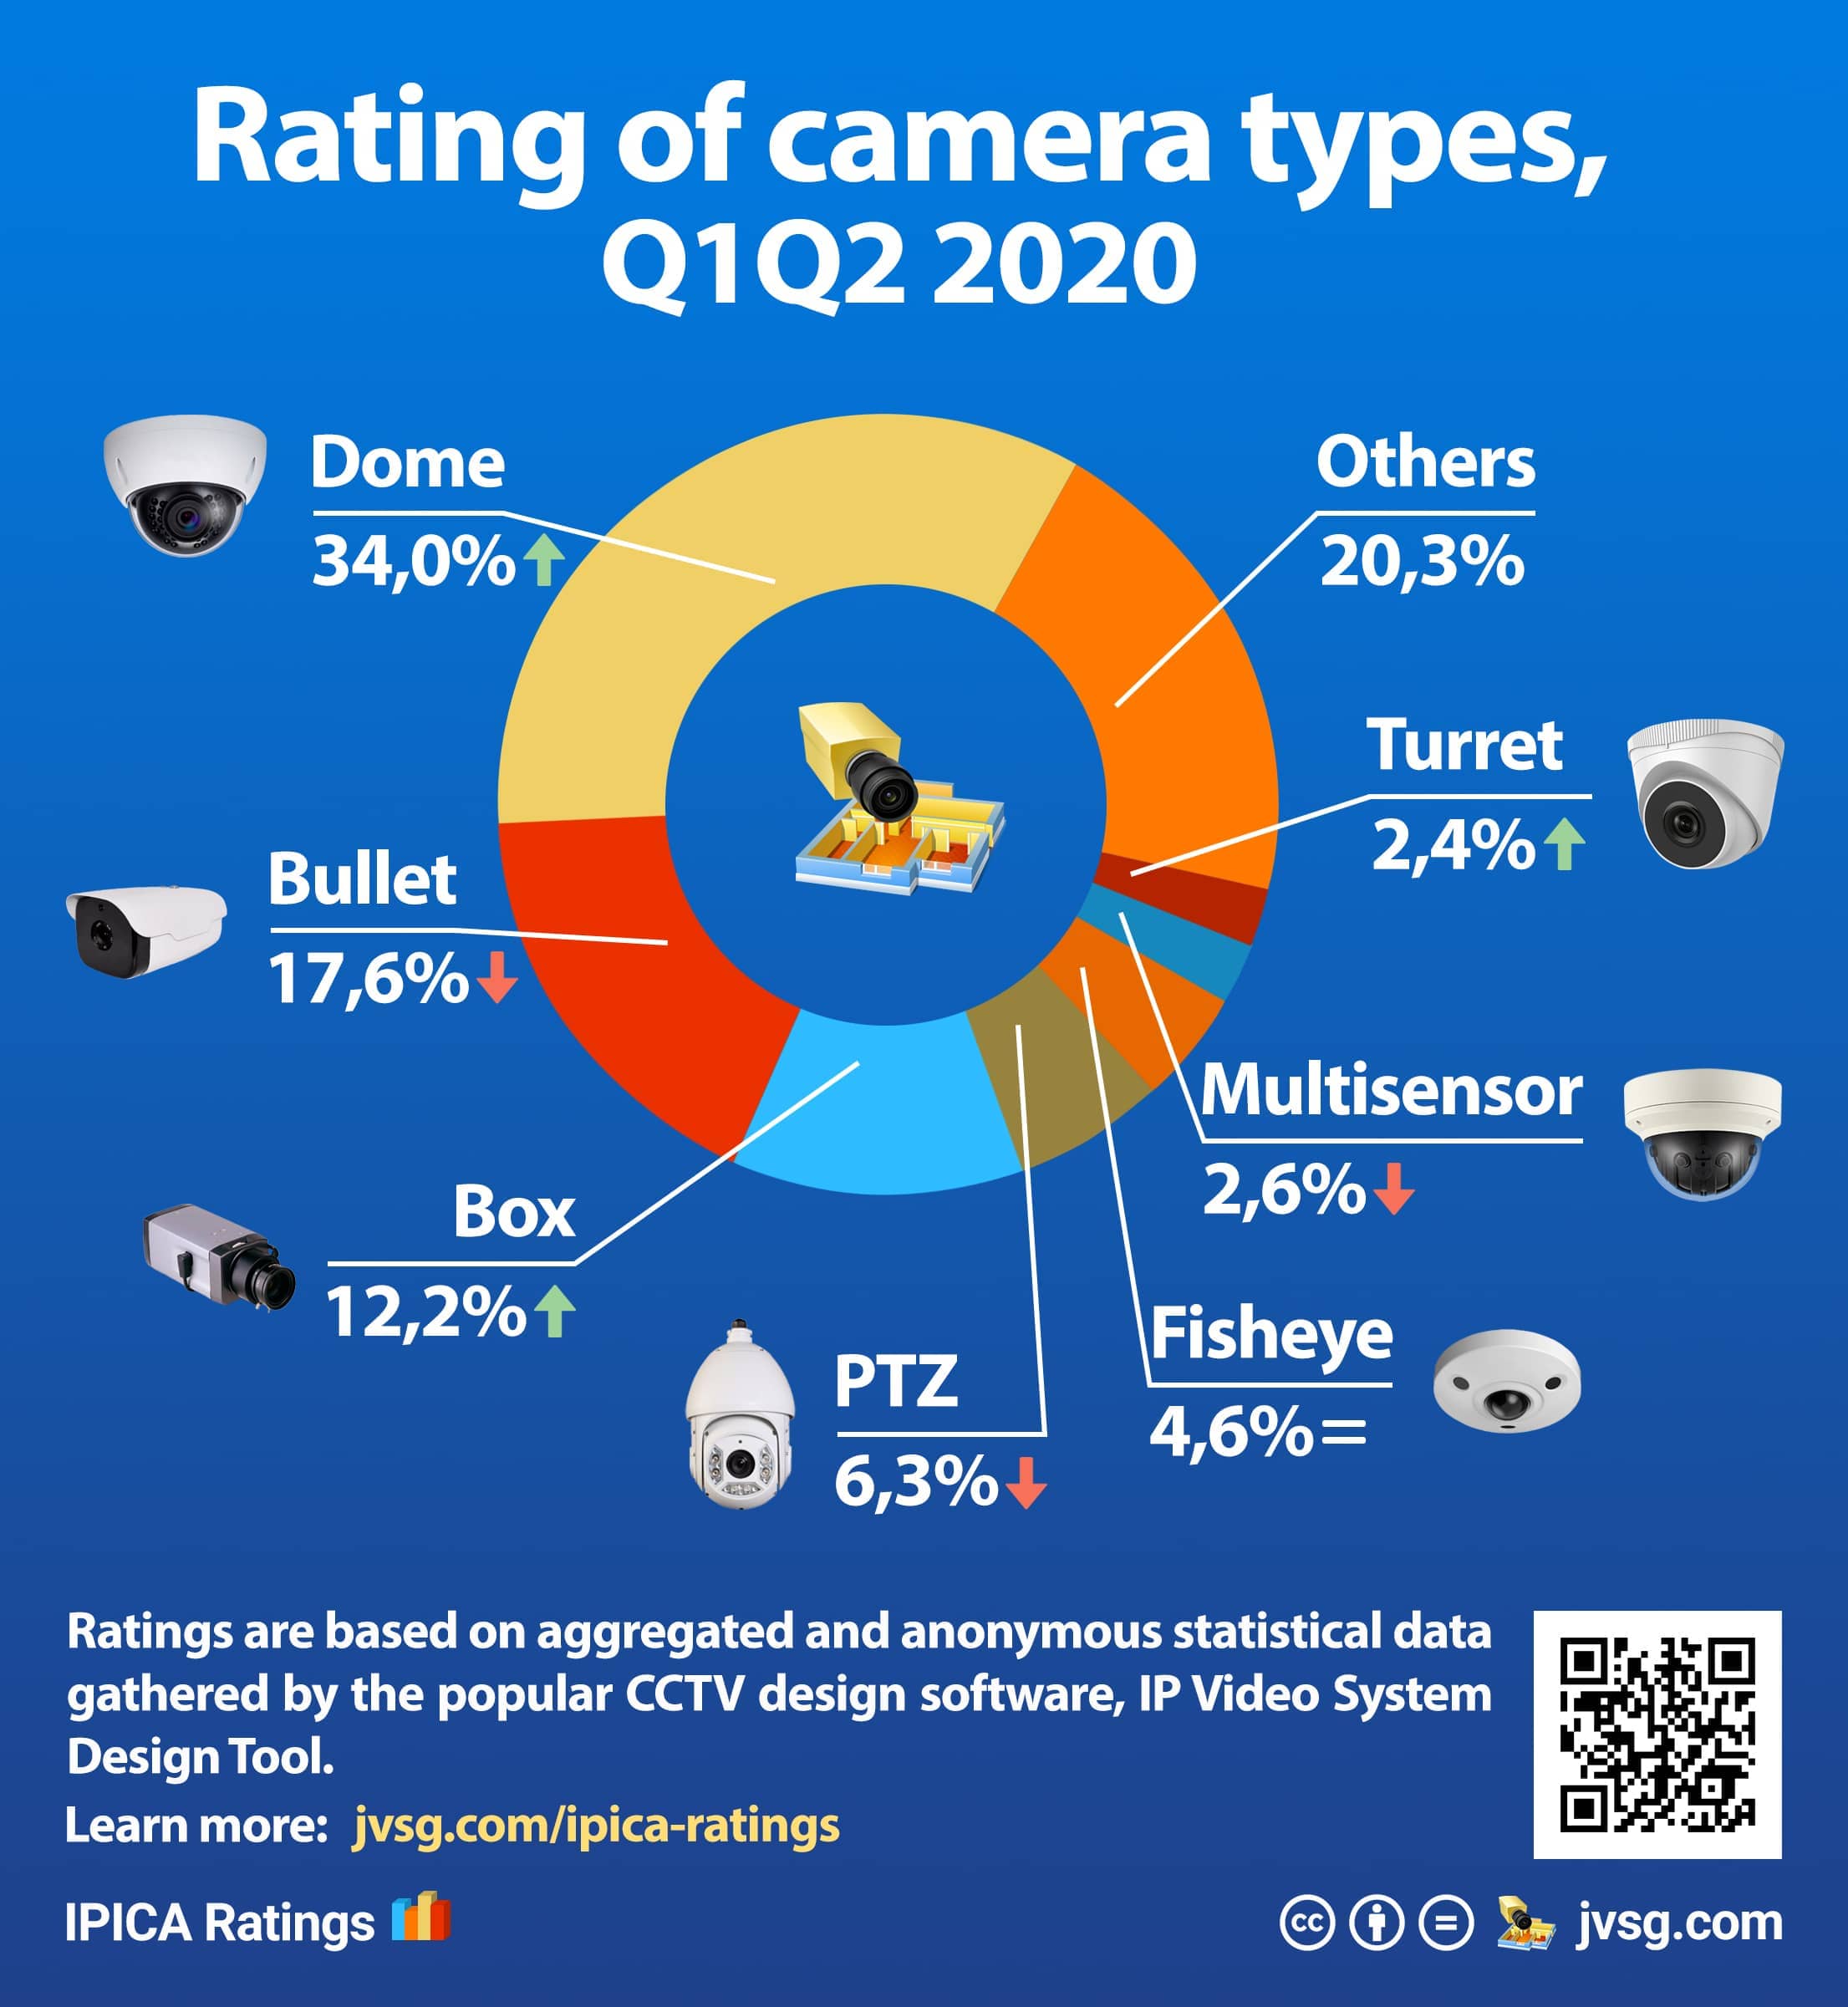 cctv cameras manufacturers